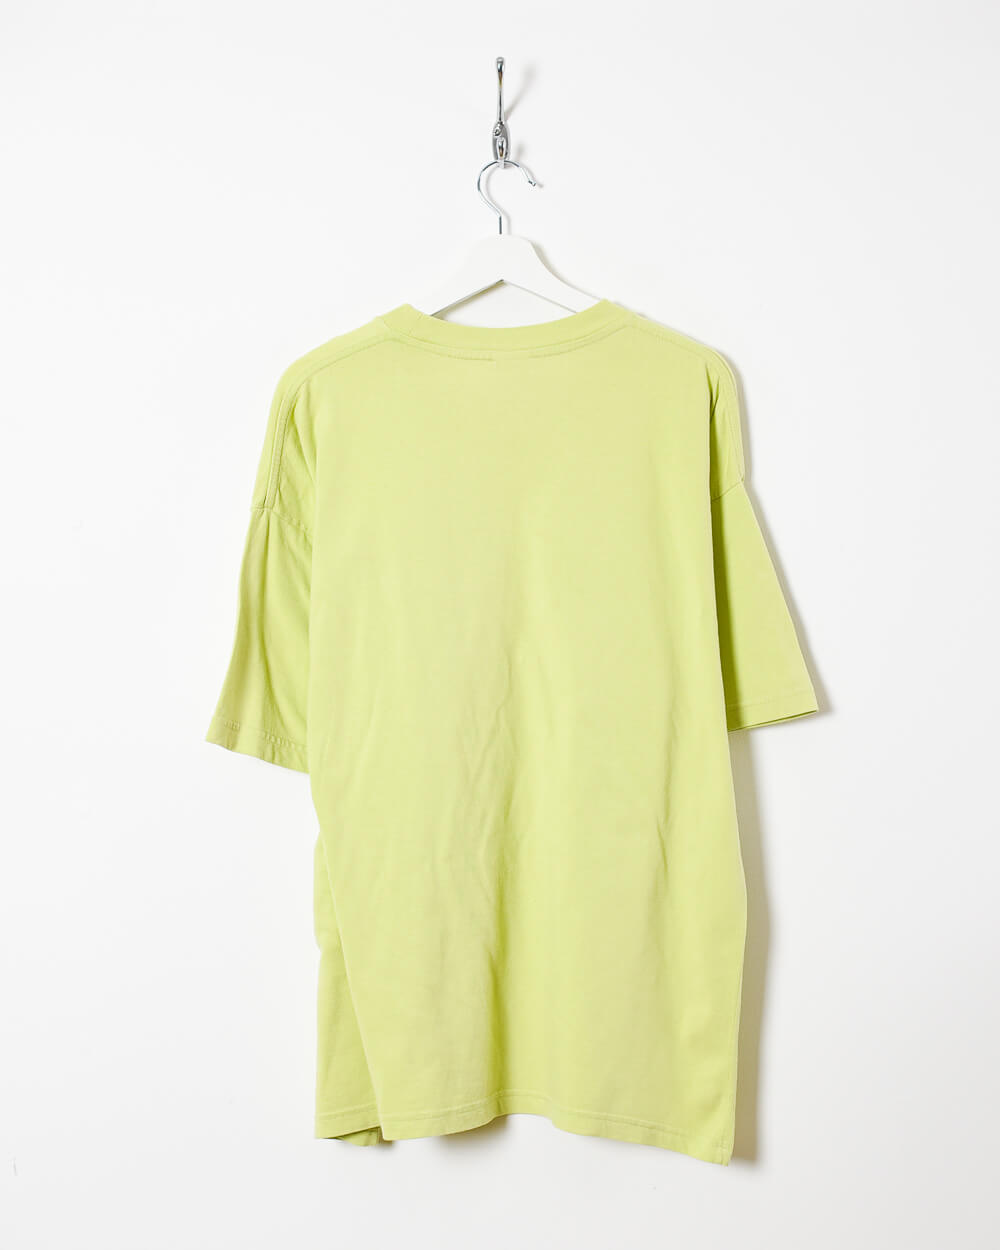 Green Nike T-Shirt - X-Large